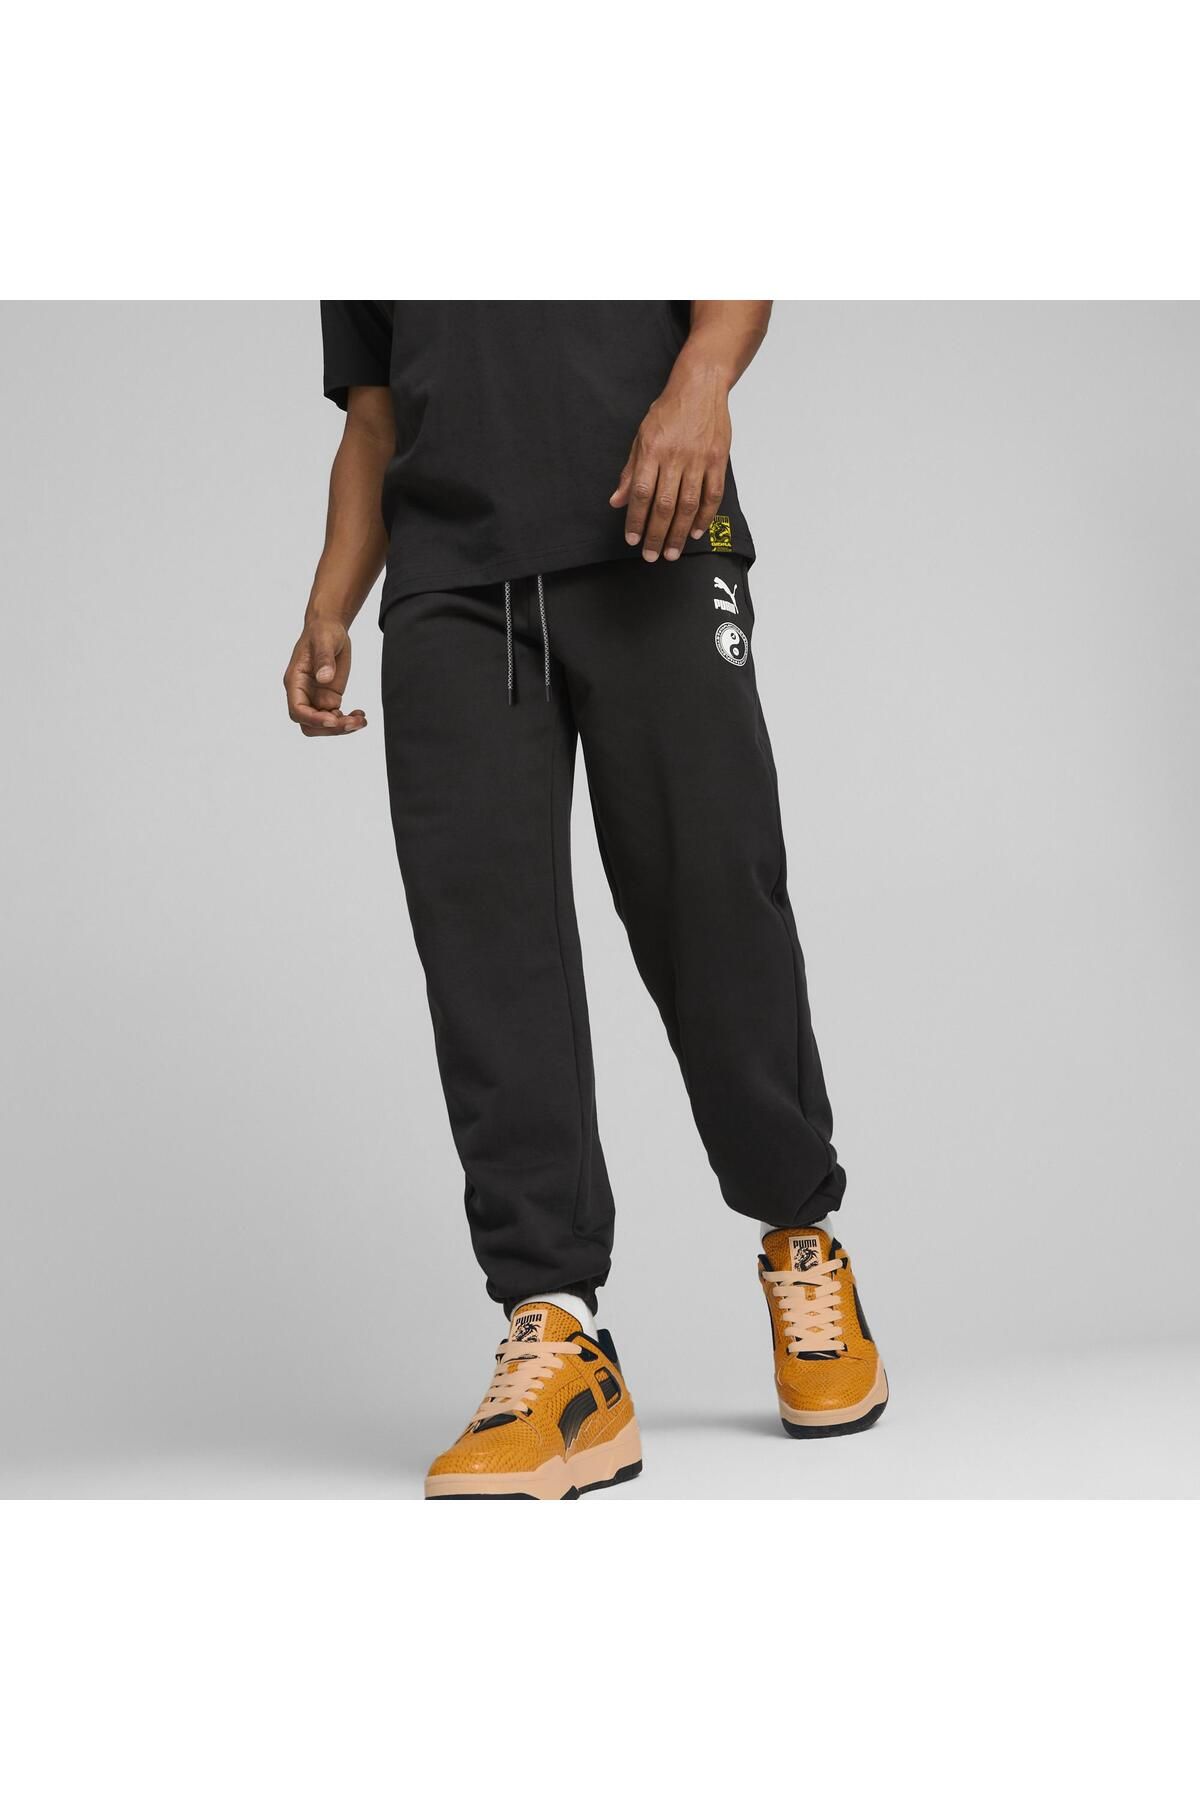 Puma شلوار گرمكن ورزشى مردانه مدل X Staple Sweatpants tr